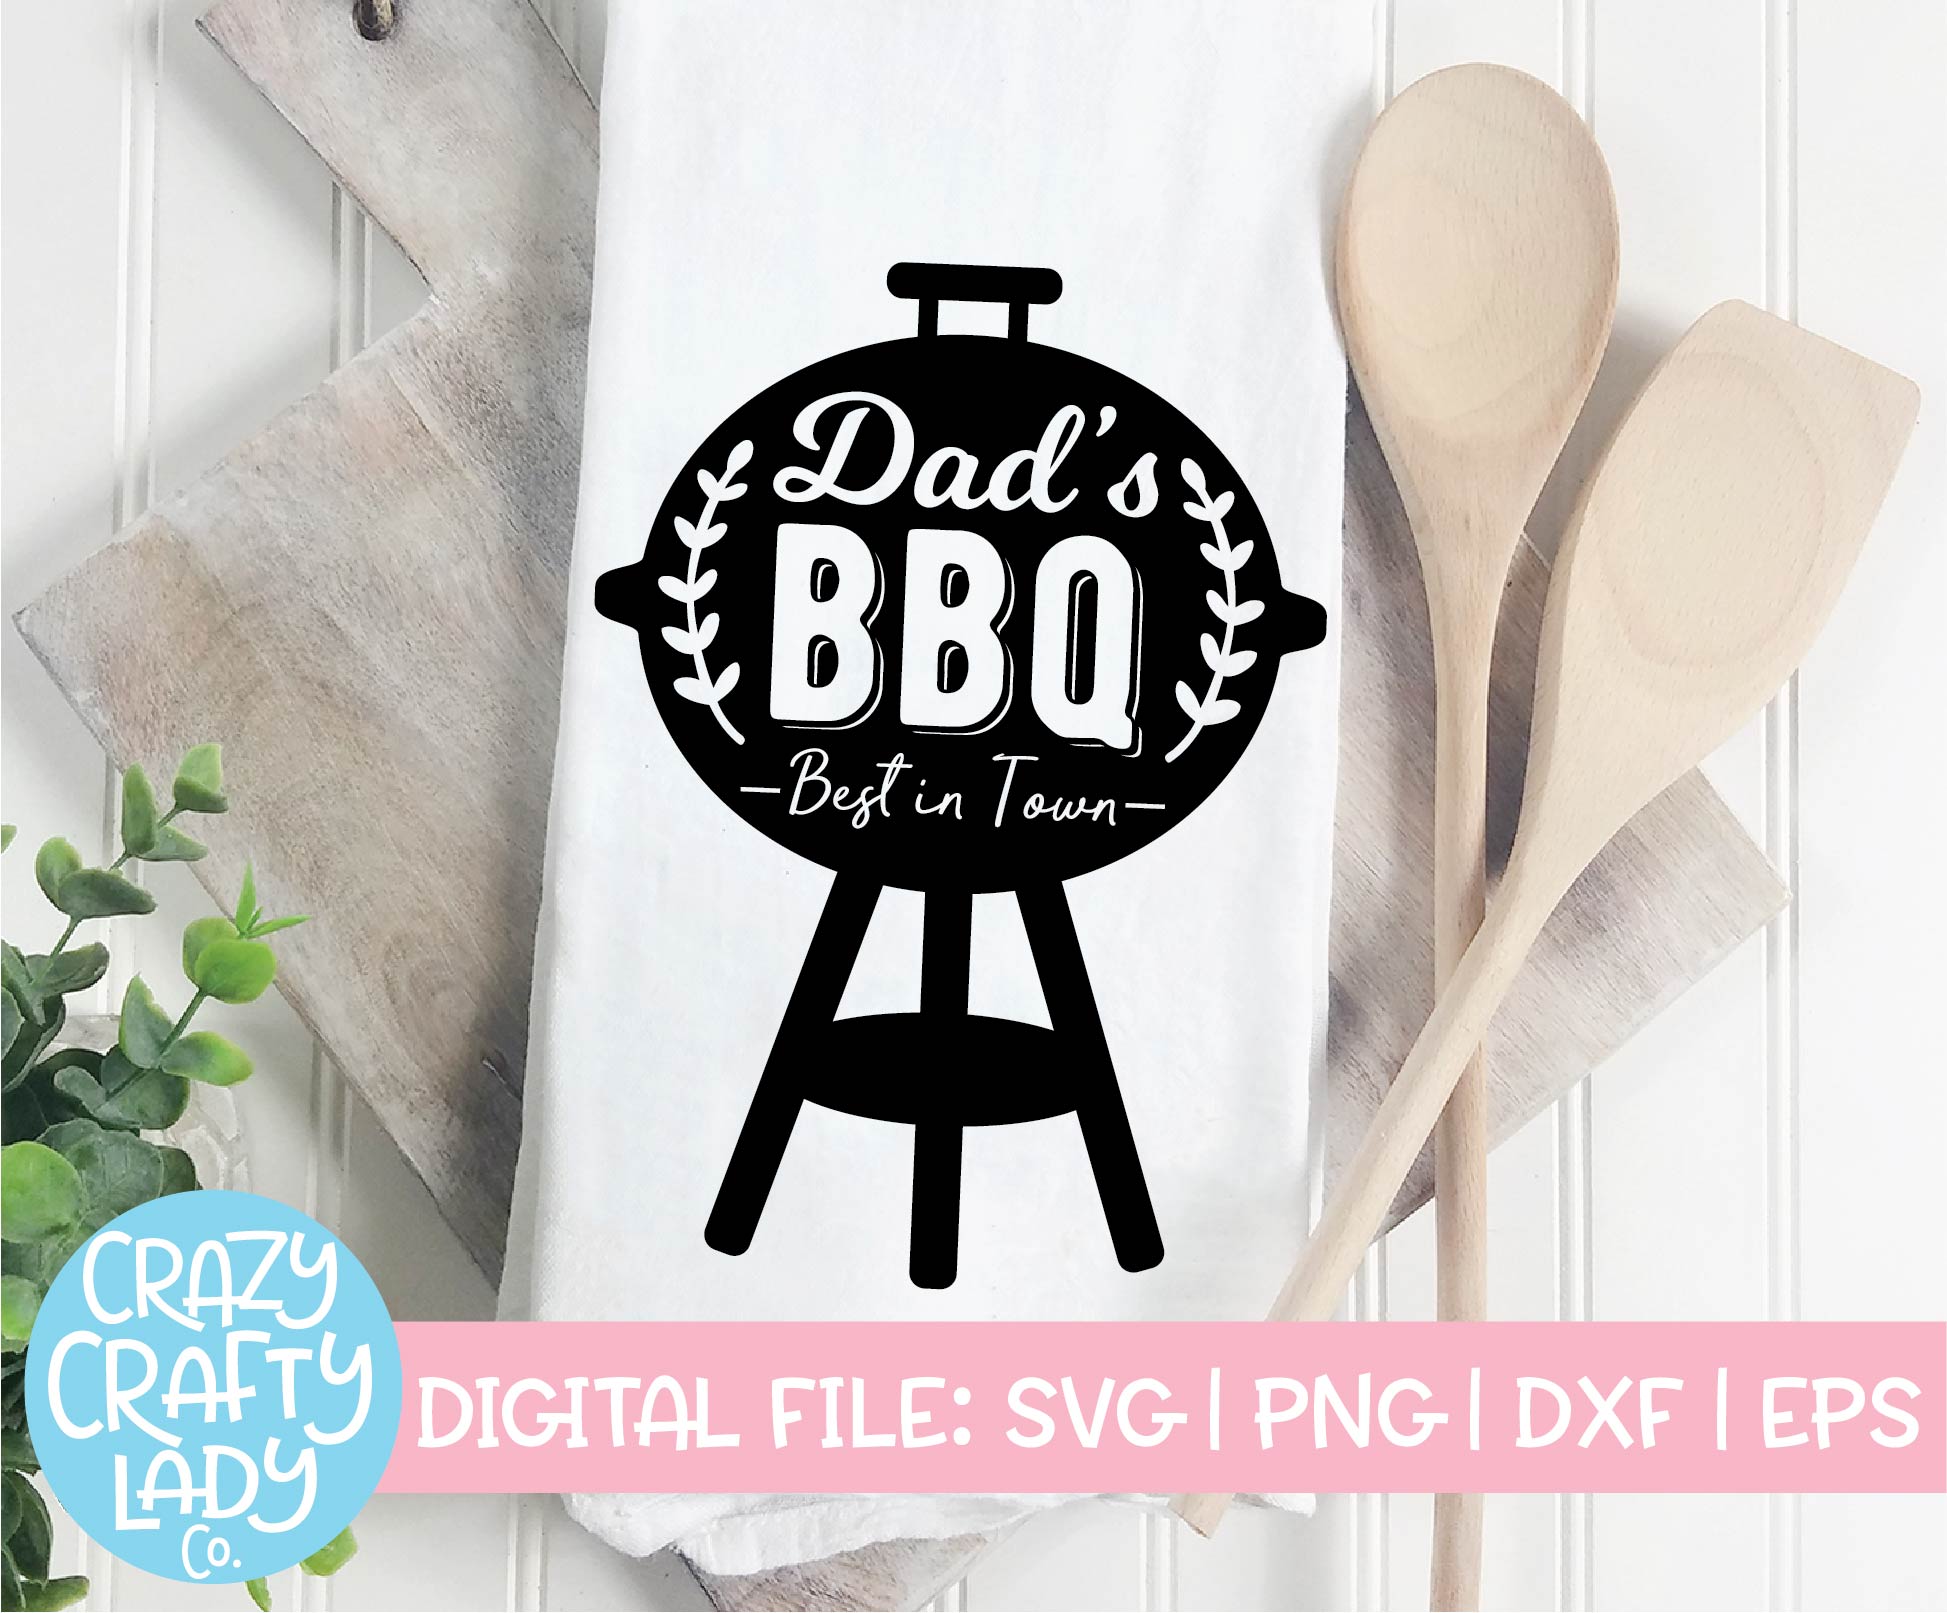 Download Dad SVG Cut File Bundle - Crazy Crafty Lady Co.